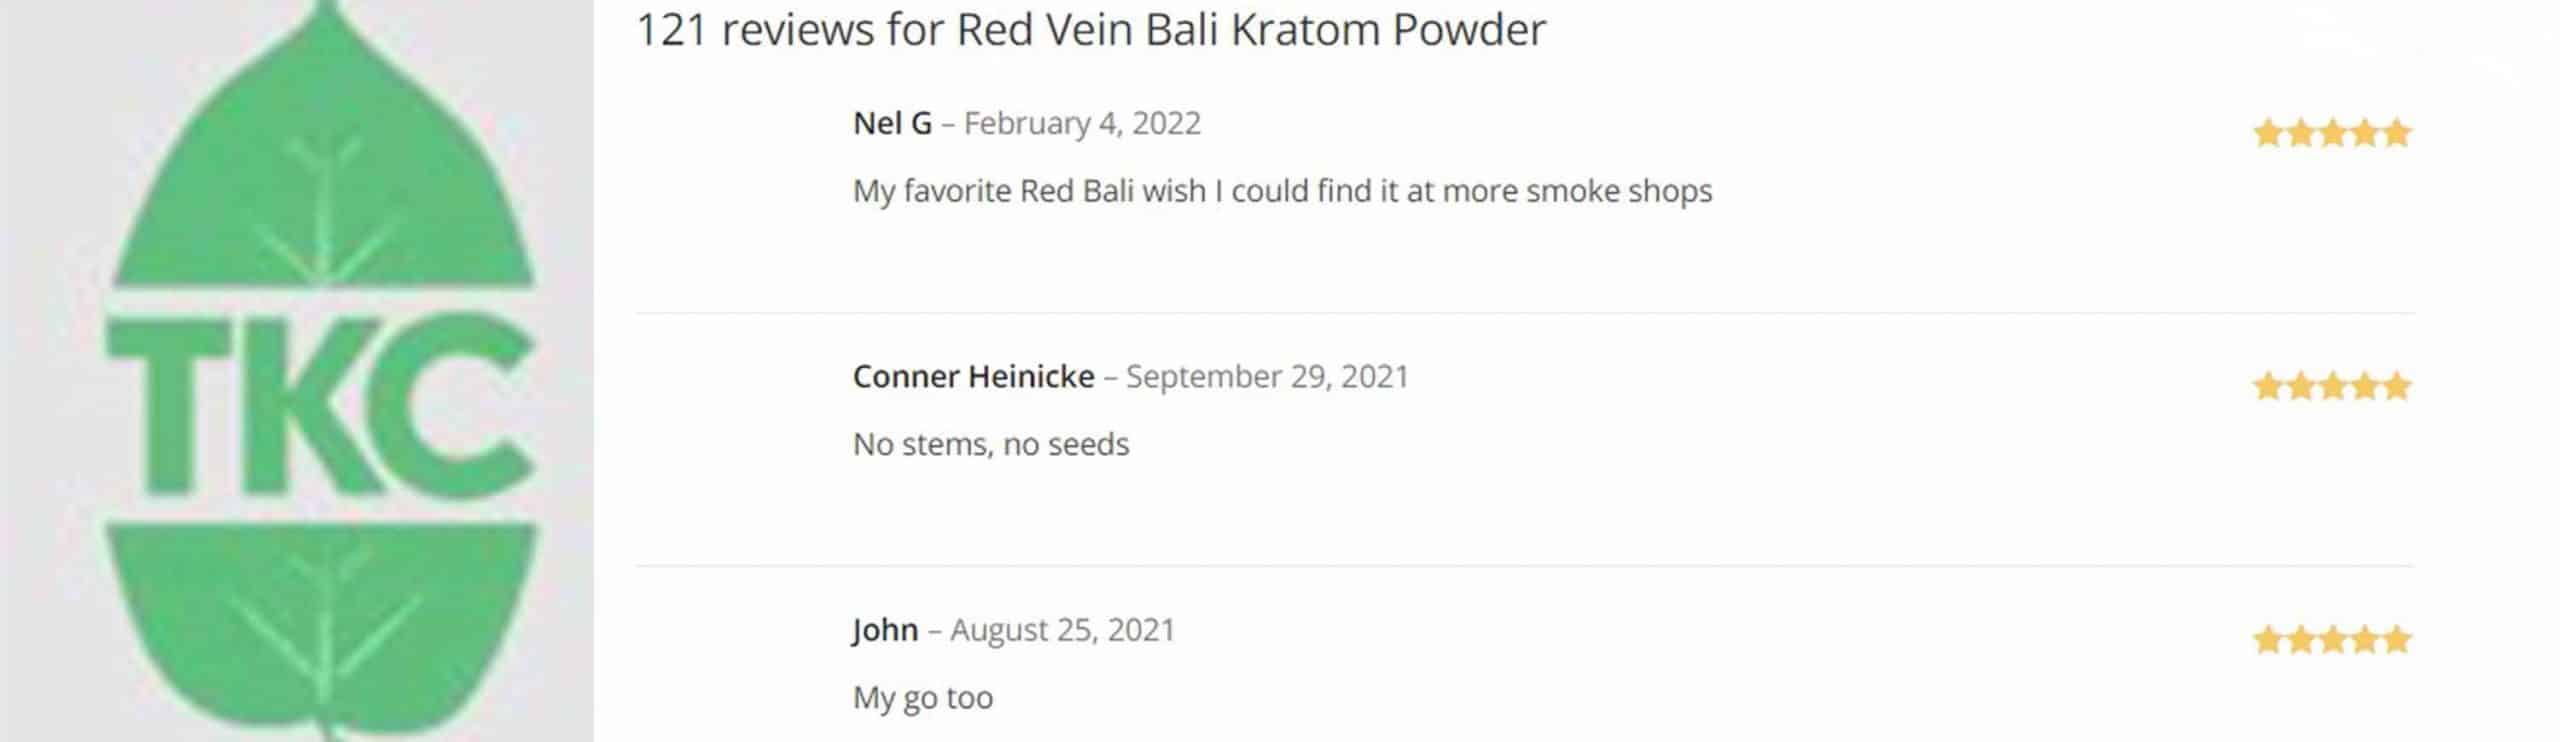 image of the kratom company reviews